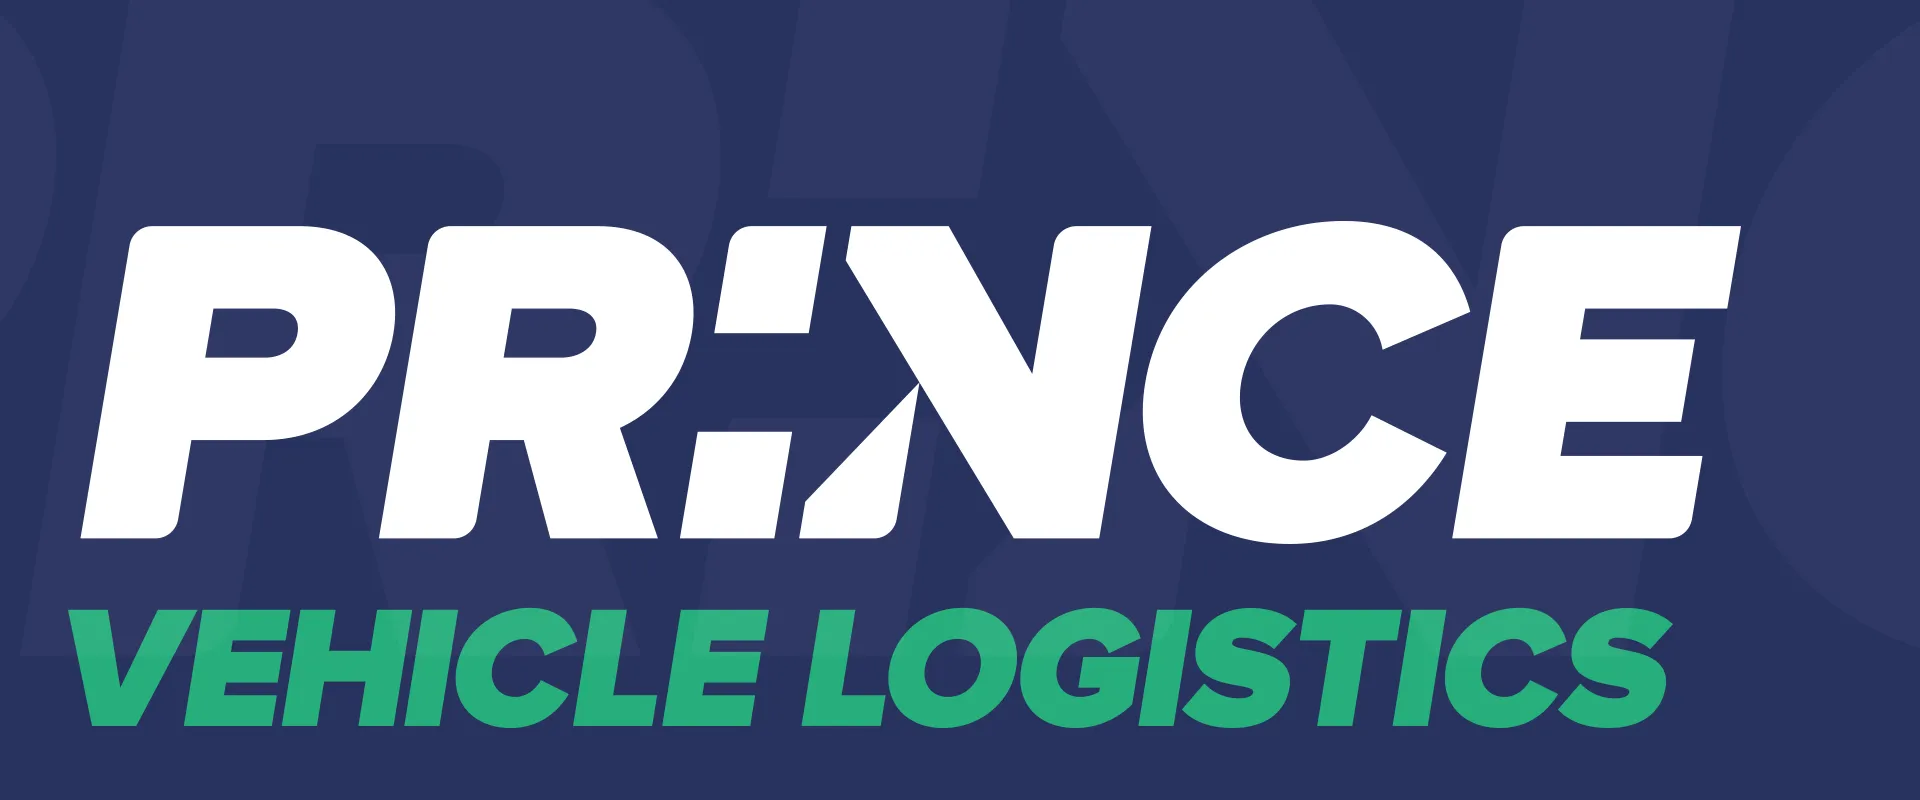 Prince Vehicle Logistics logo